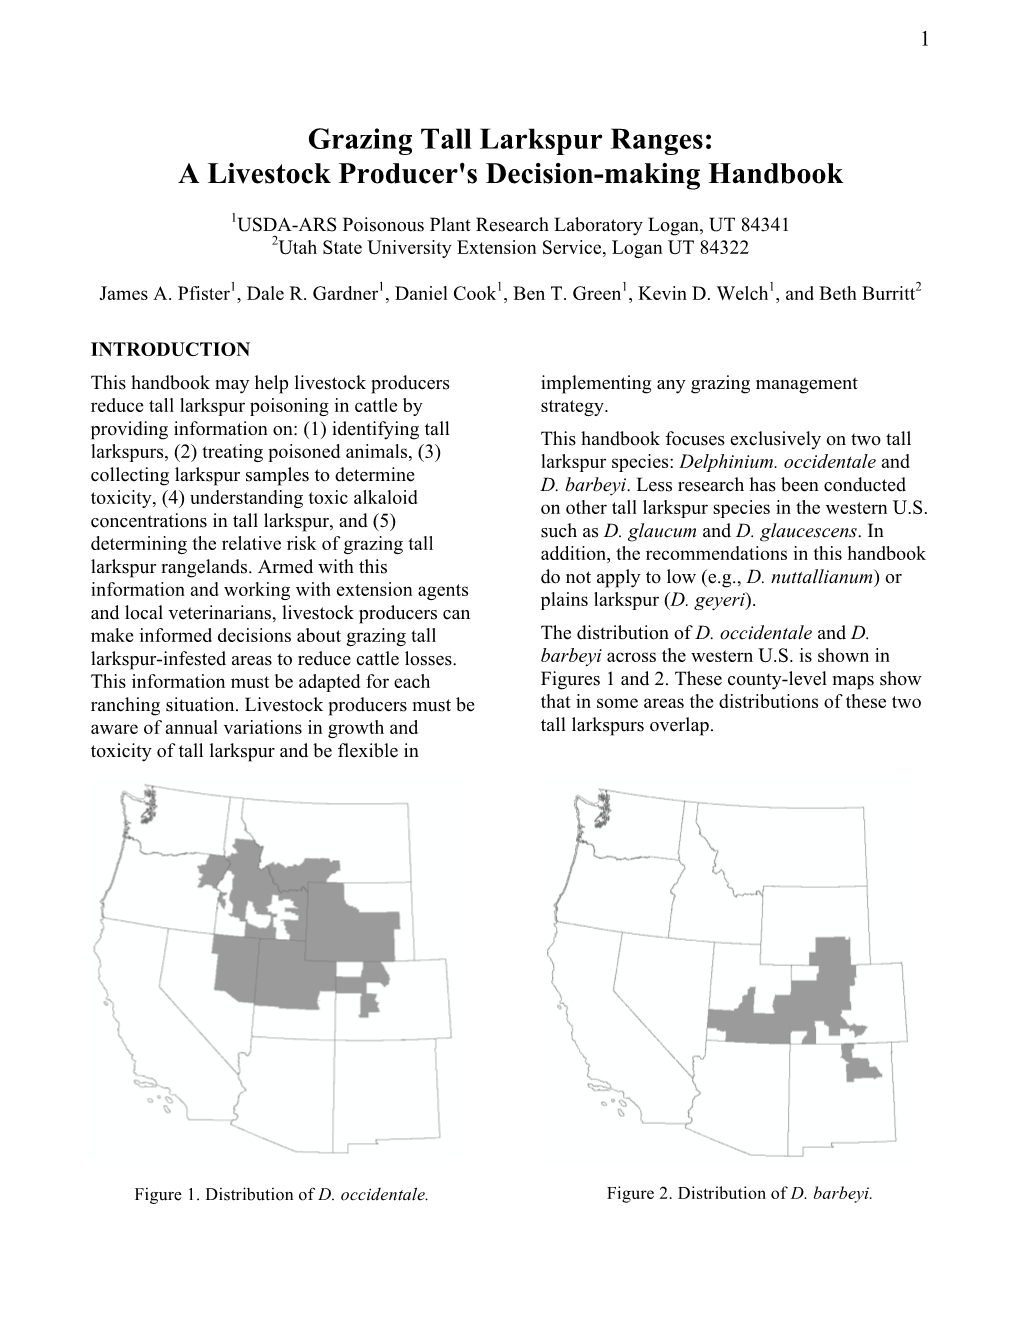 Grazing Tall Larkspur Ranges: a Livestock Producer's Decision-Making Handbook